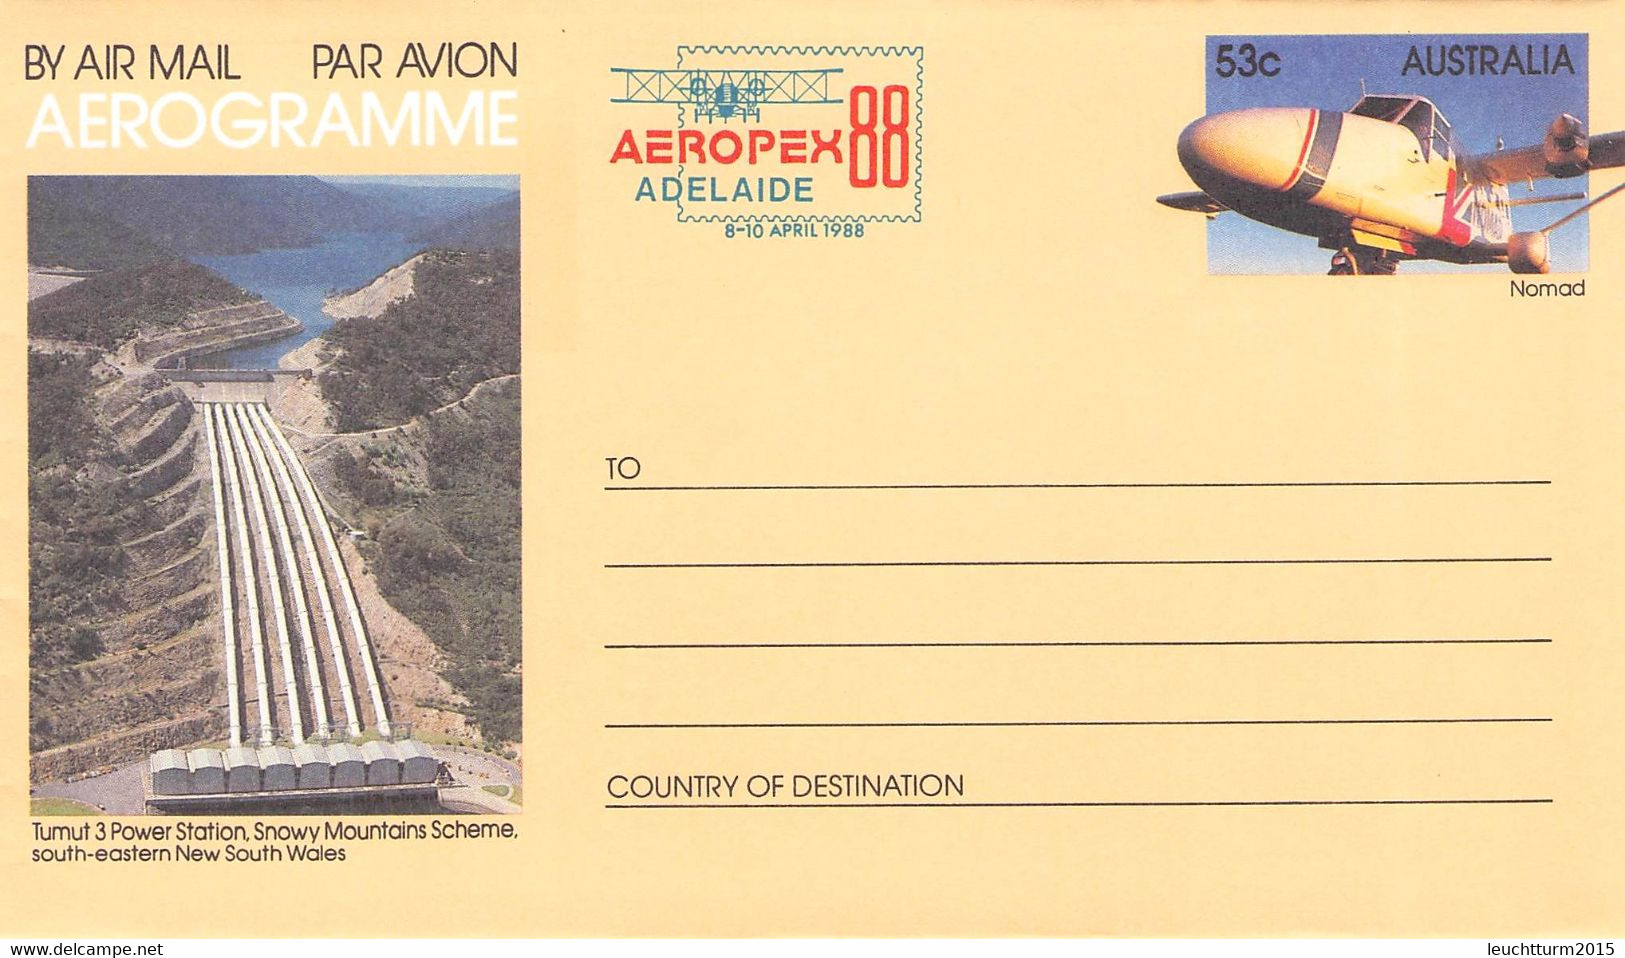 AUSTRALIA - SET AEROGRAMME 53c 1988 AEROPEX '88 MNH /QD103 - Luchtpostbladen